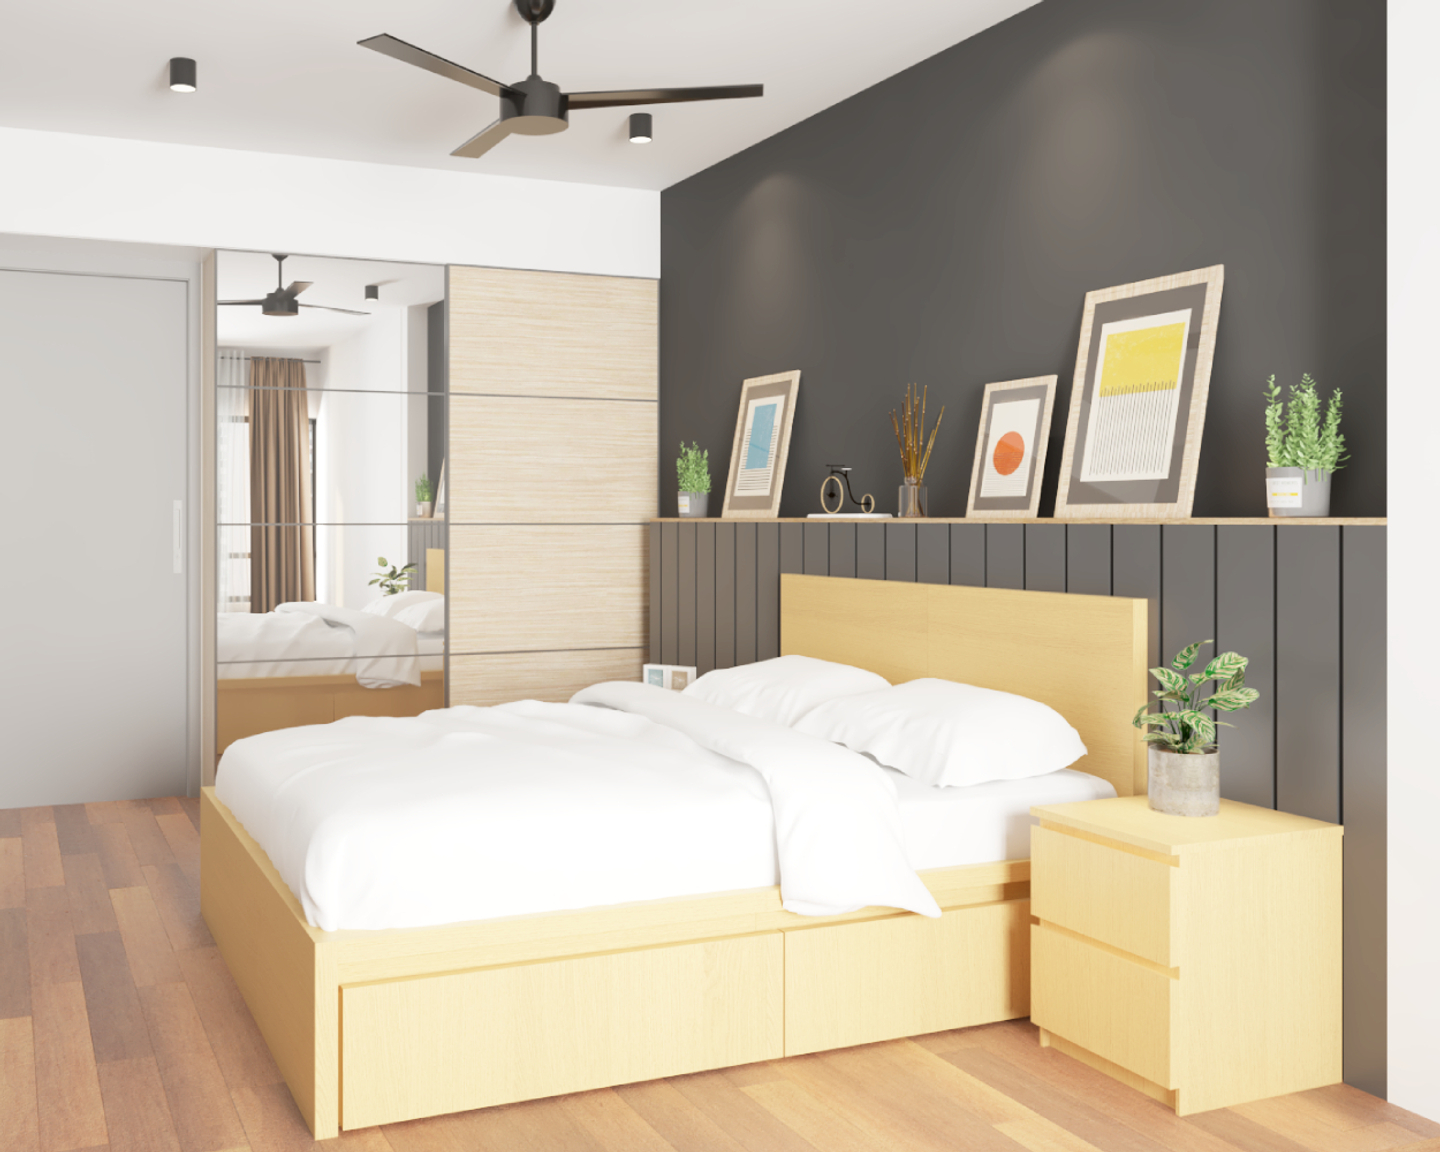 Bedroom Design With Floor-To-Ceiling Storage - Livspace